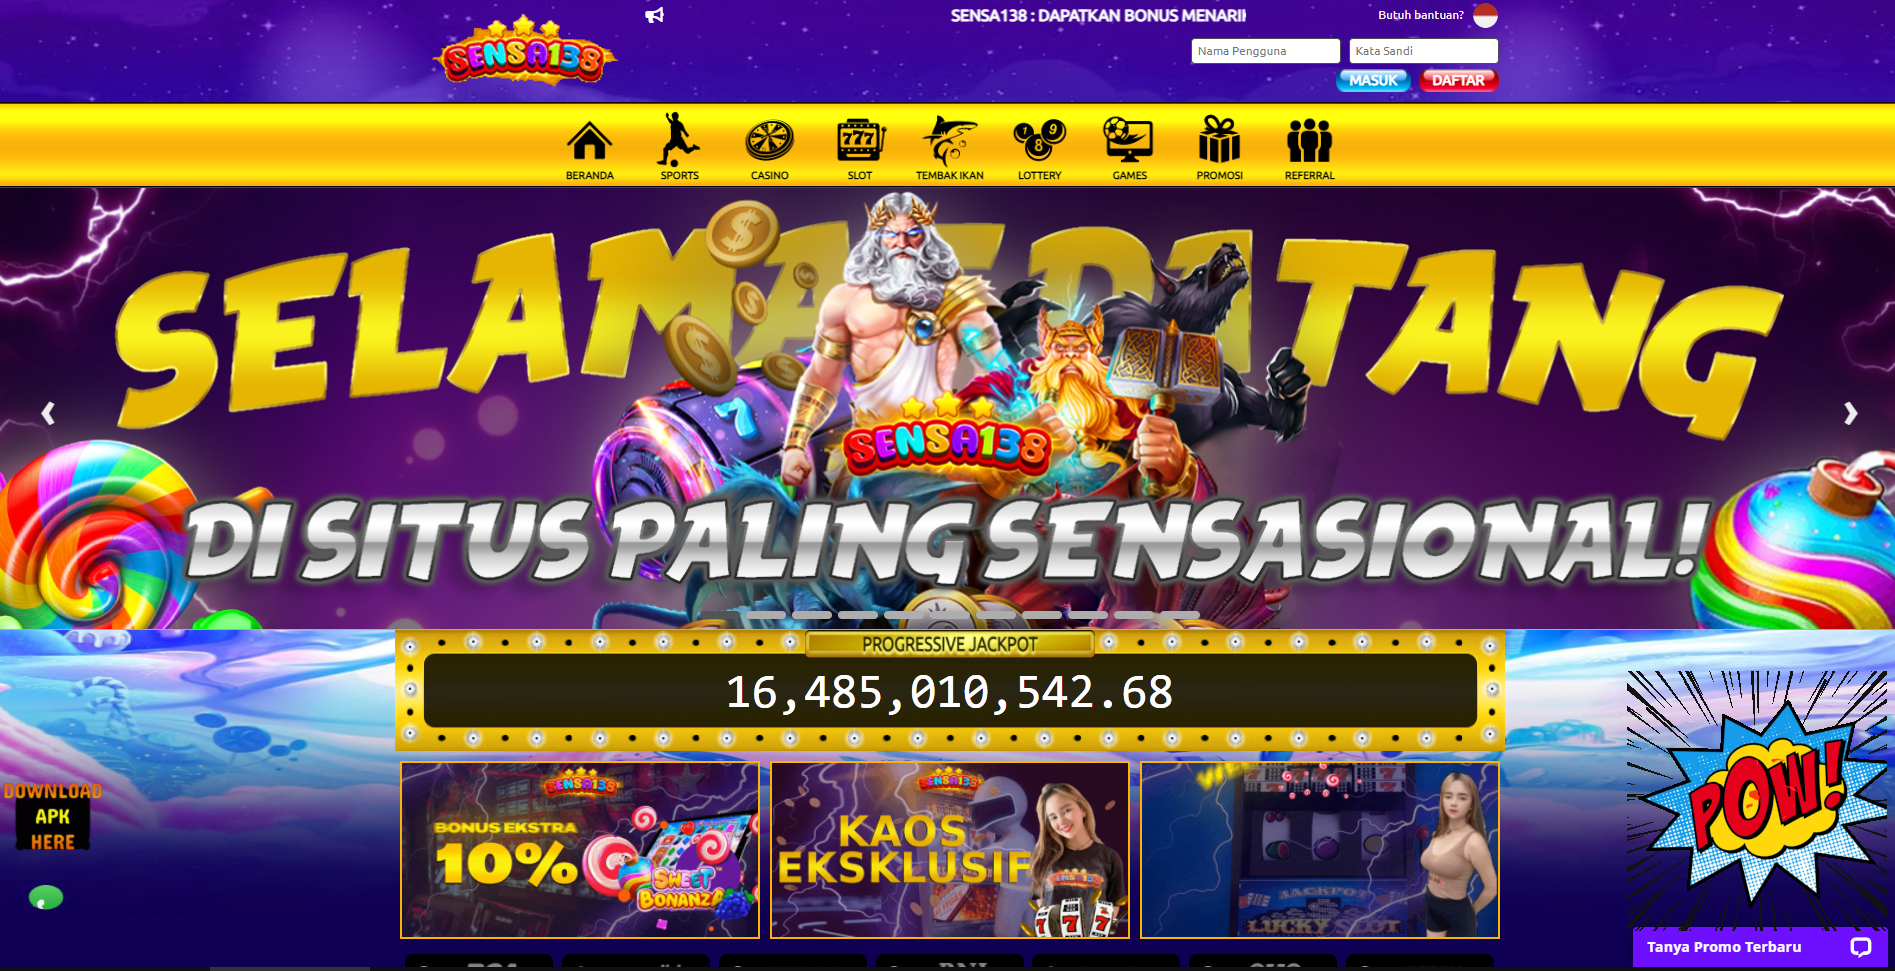 Sensa138 Agen Slot Online Resmi, Terpercaya & Terlengkap